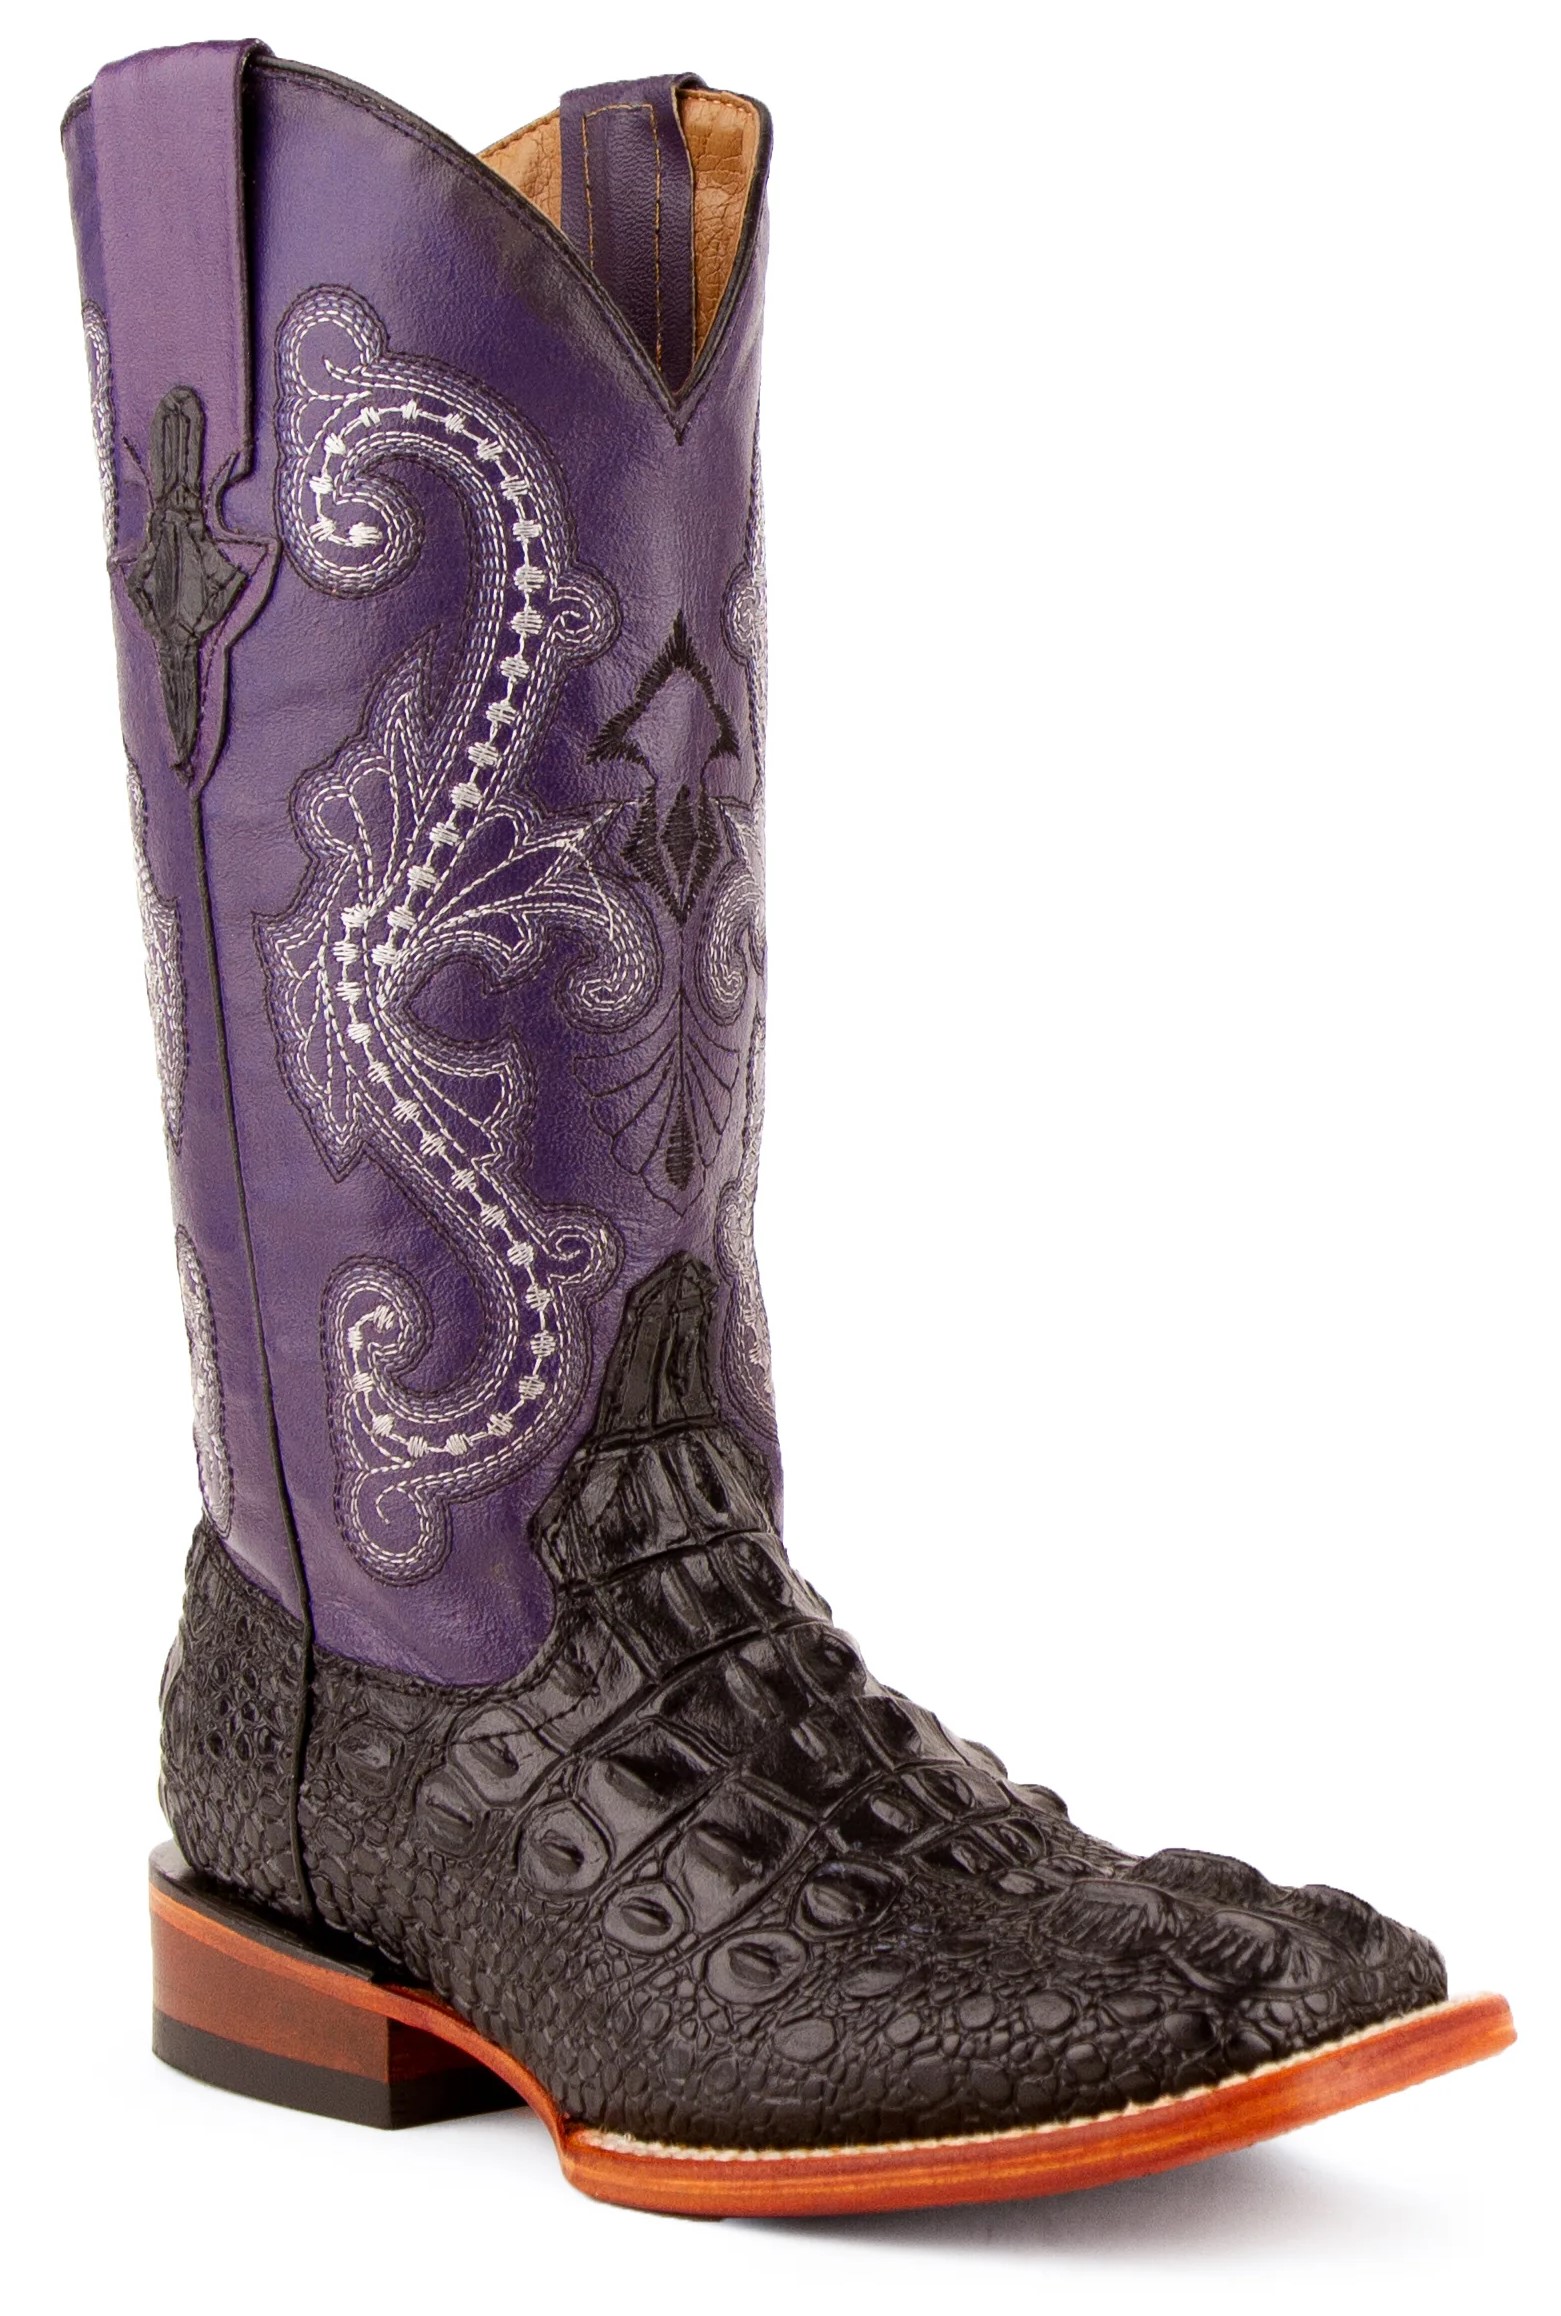 Ferrini Ladies "Rancher" Black / Purple Caiman Print Leather Square Toe Cowgirl Boots 90493-04